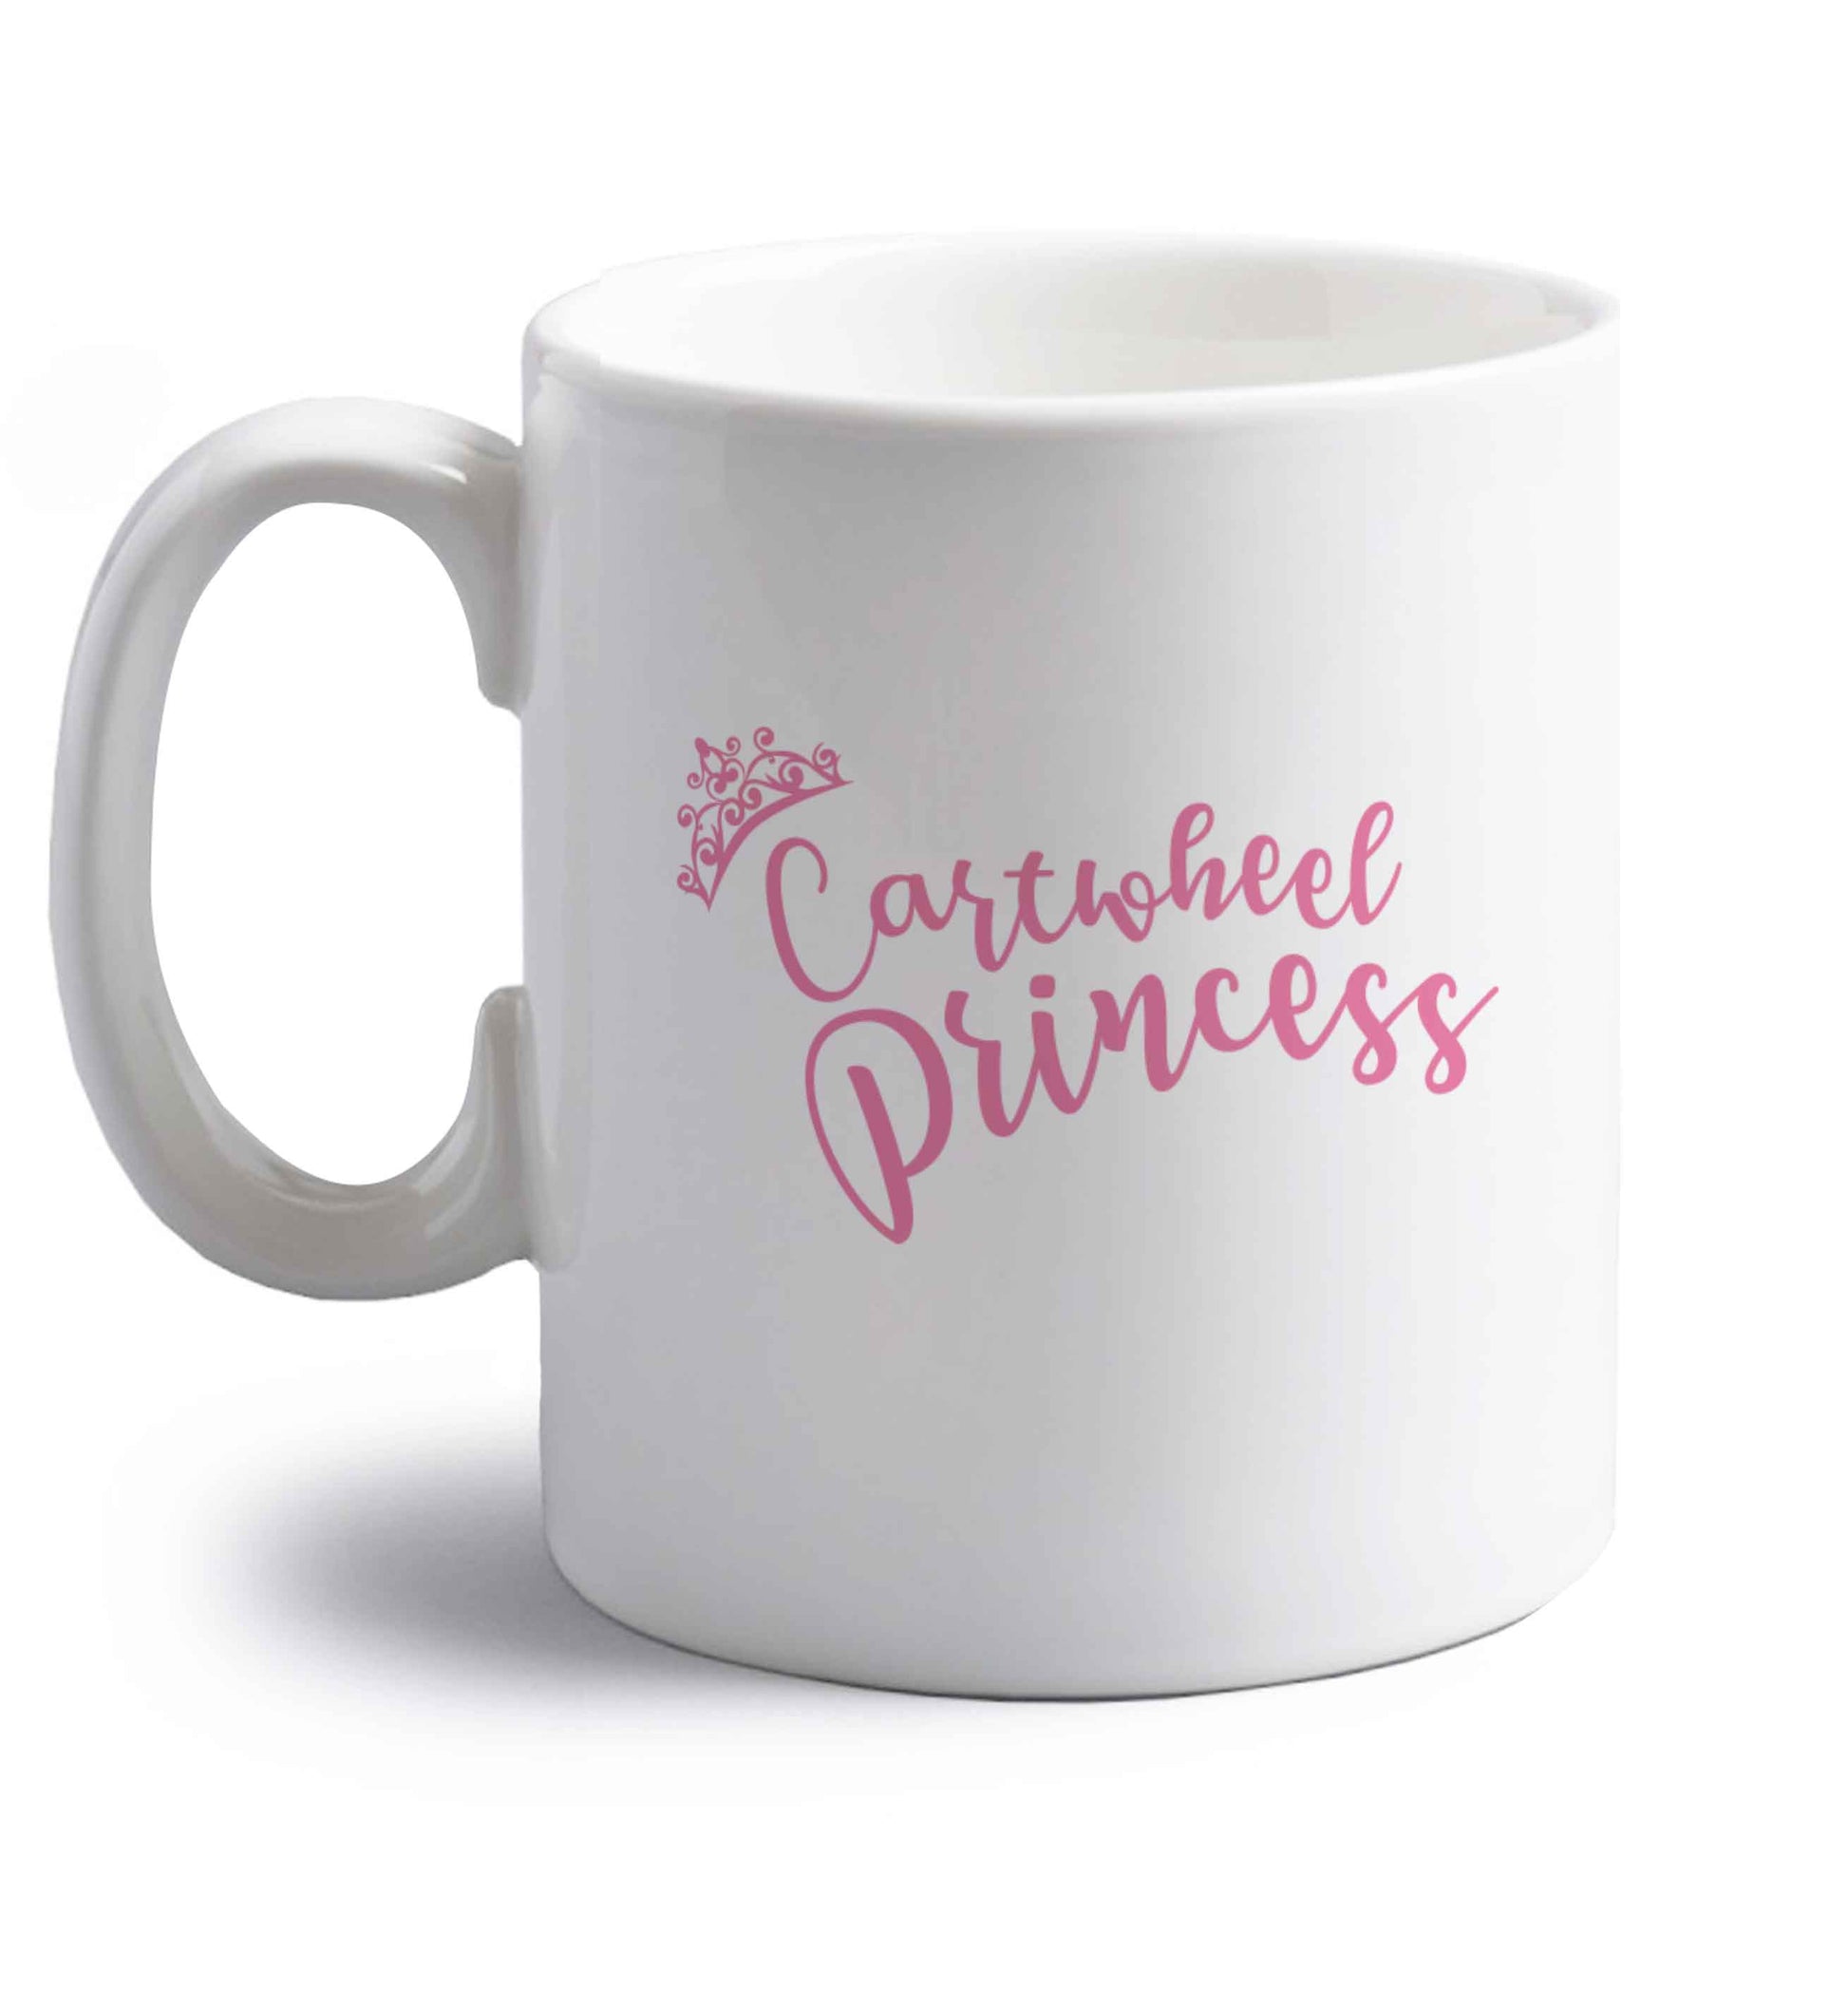 Cartwheel princess right handed white ceramic mug 